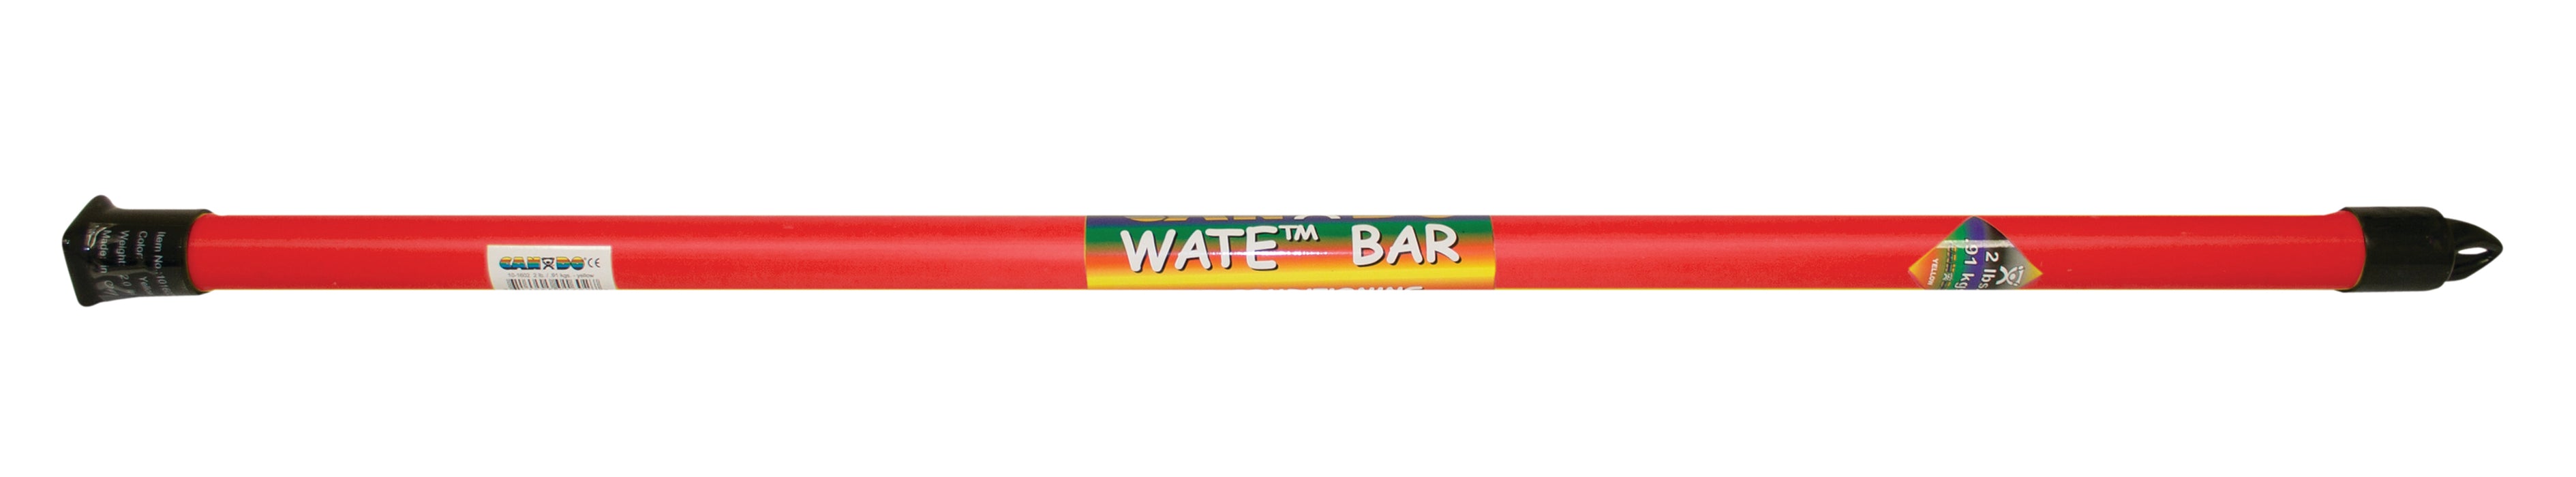 CanDo 007601-E Slim Wate Bar, Red, 3 Lbs.